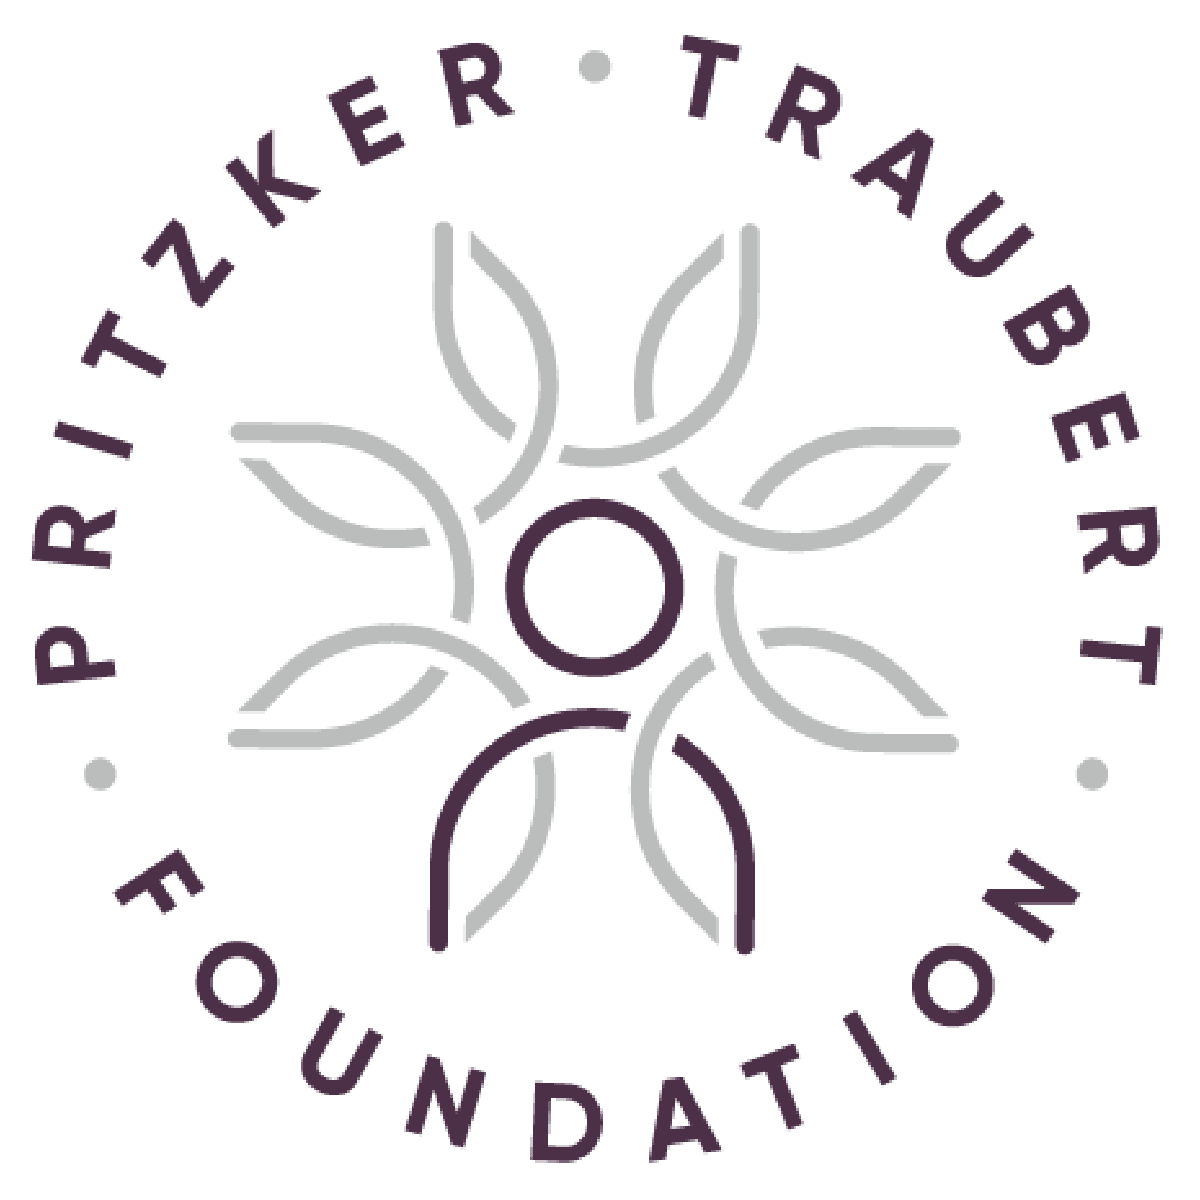 Pritzker Traubert Foundation logo